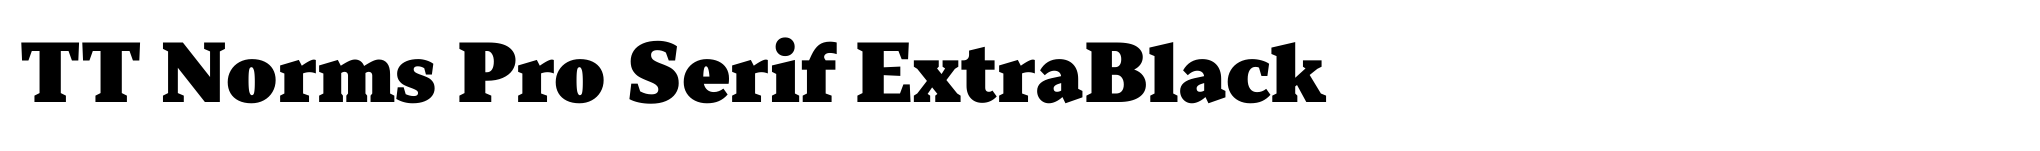 TT Norms Pro Serif ExtraBlack image